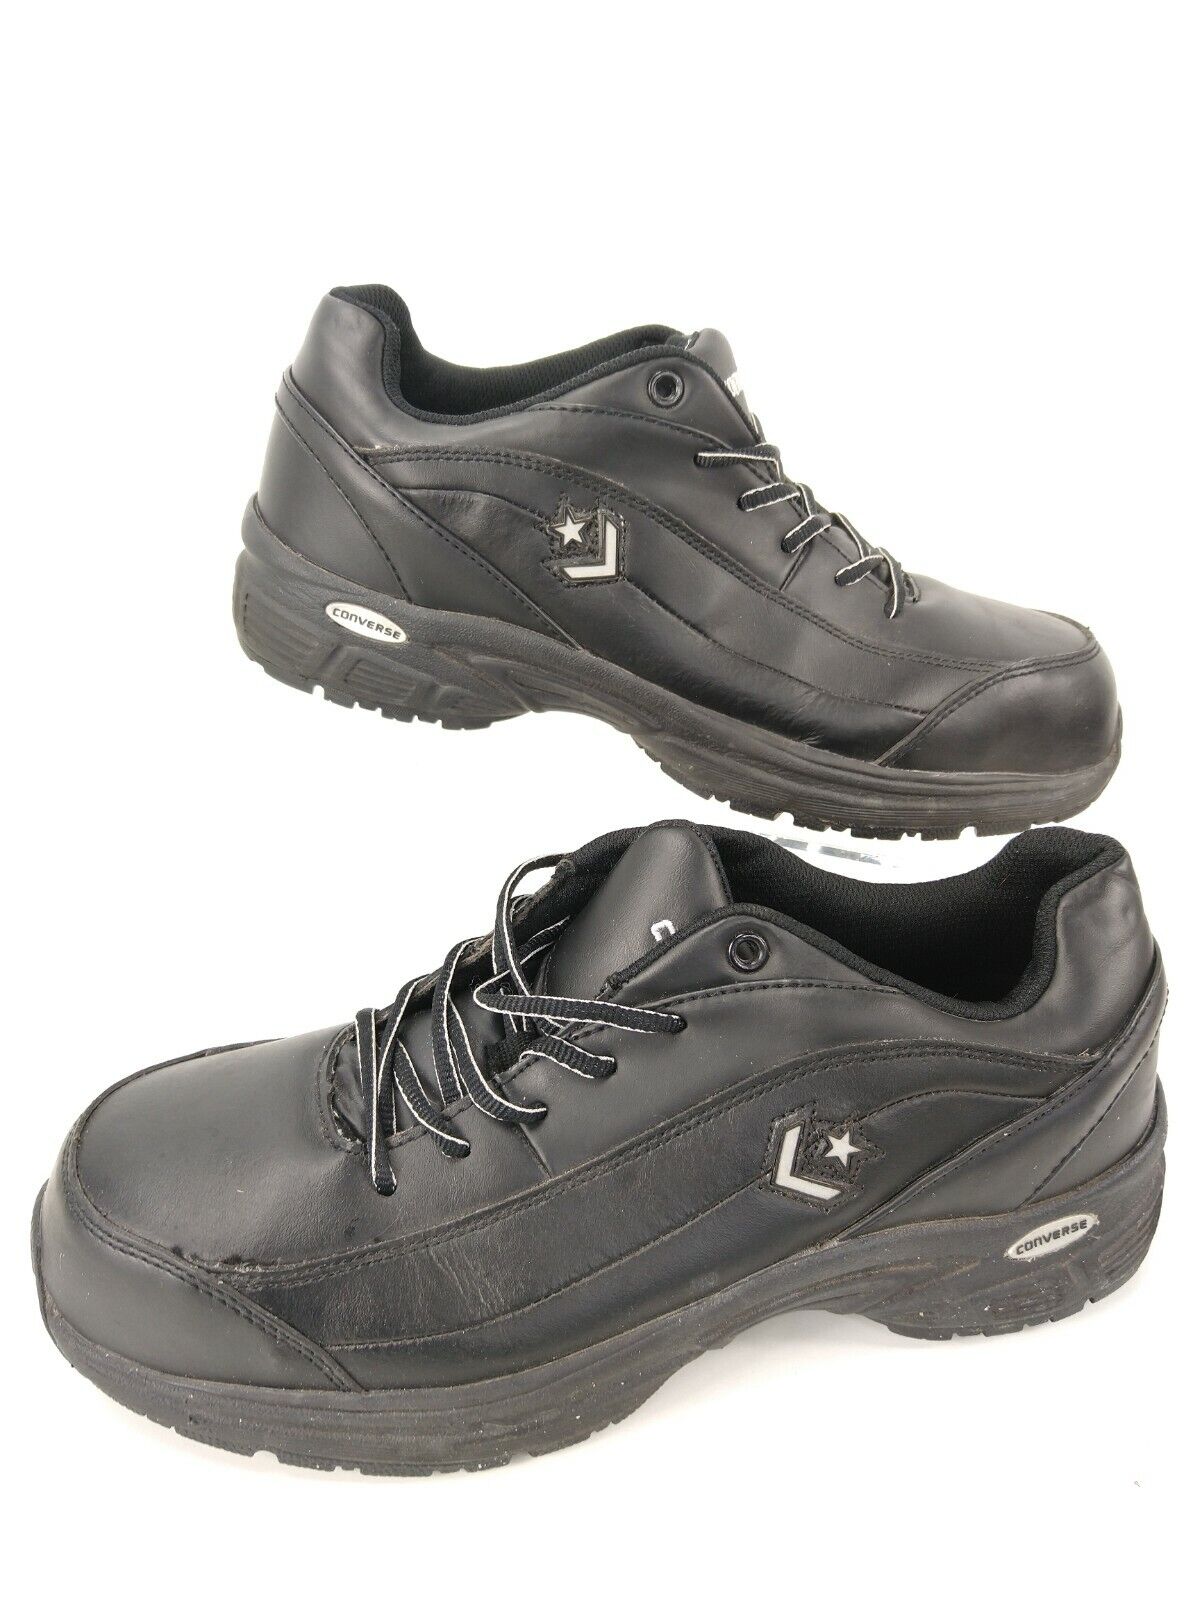 Converse Steel Toe Shoes Size Mens 10 Womens 12 Oil Slip Resistant Work  Sneakers | eBay